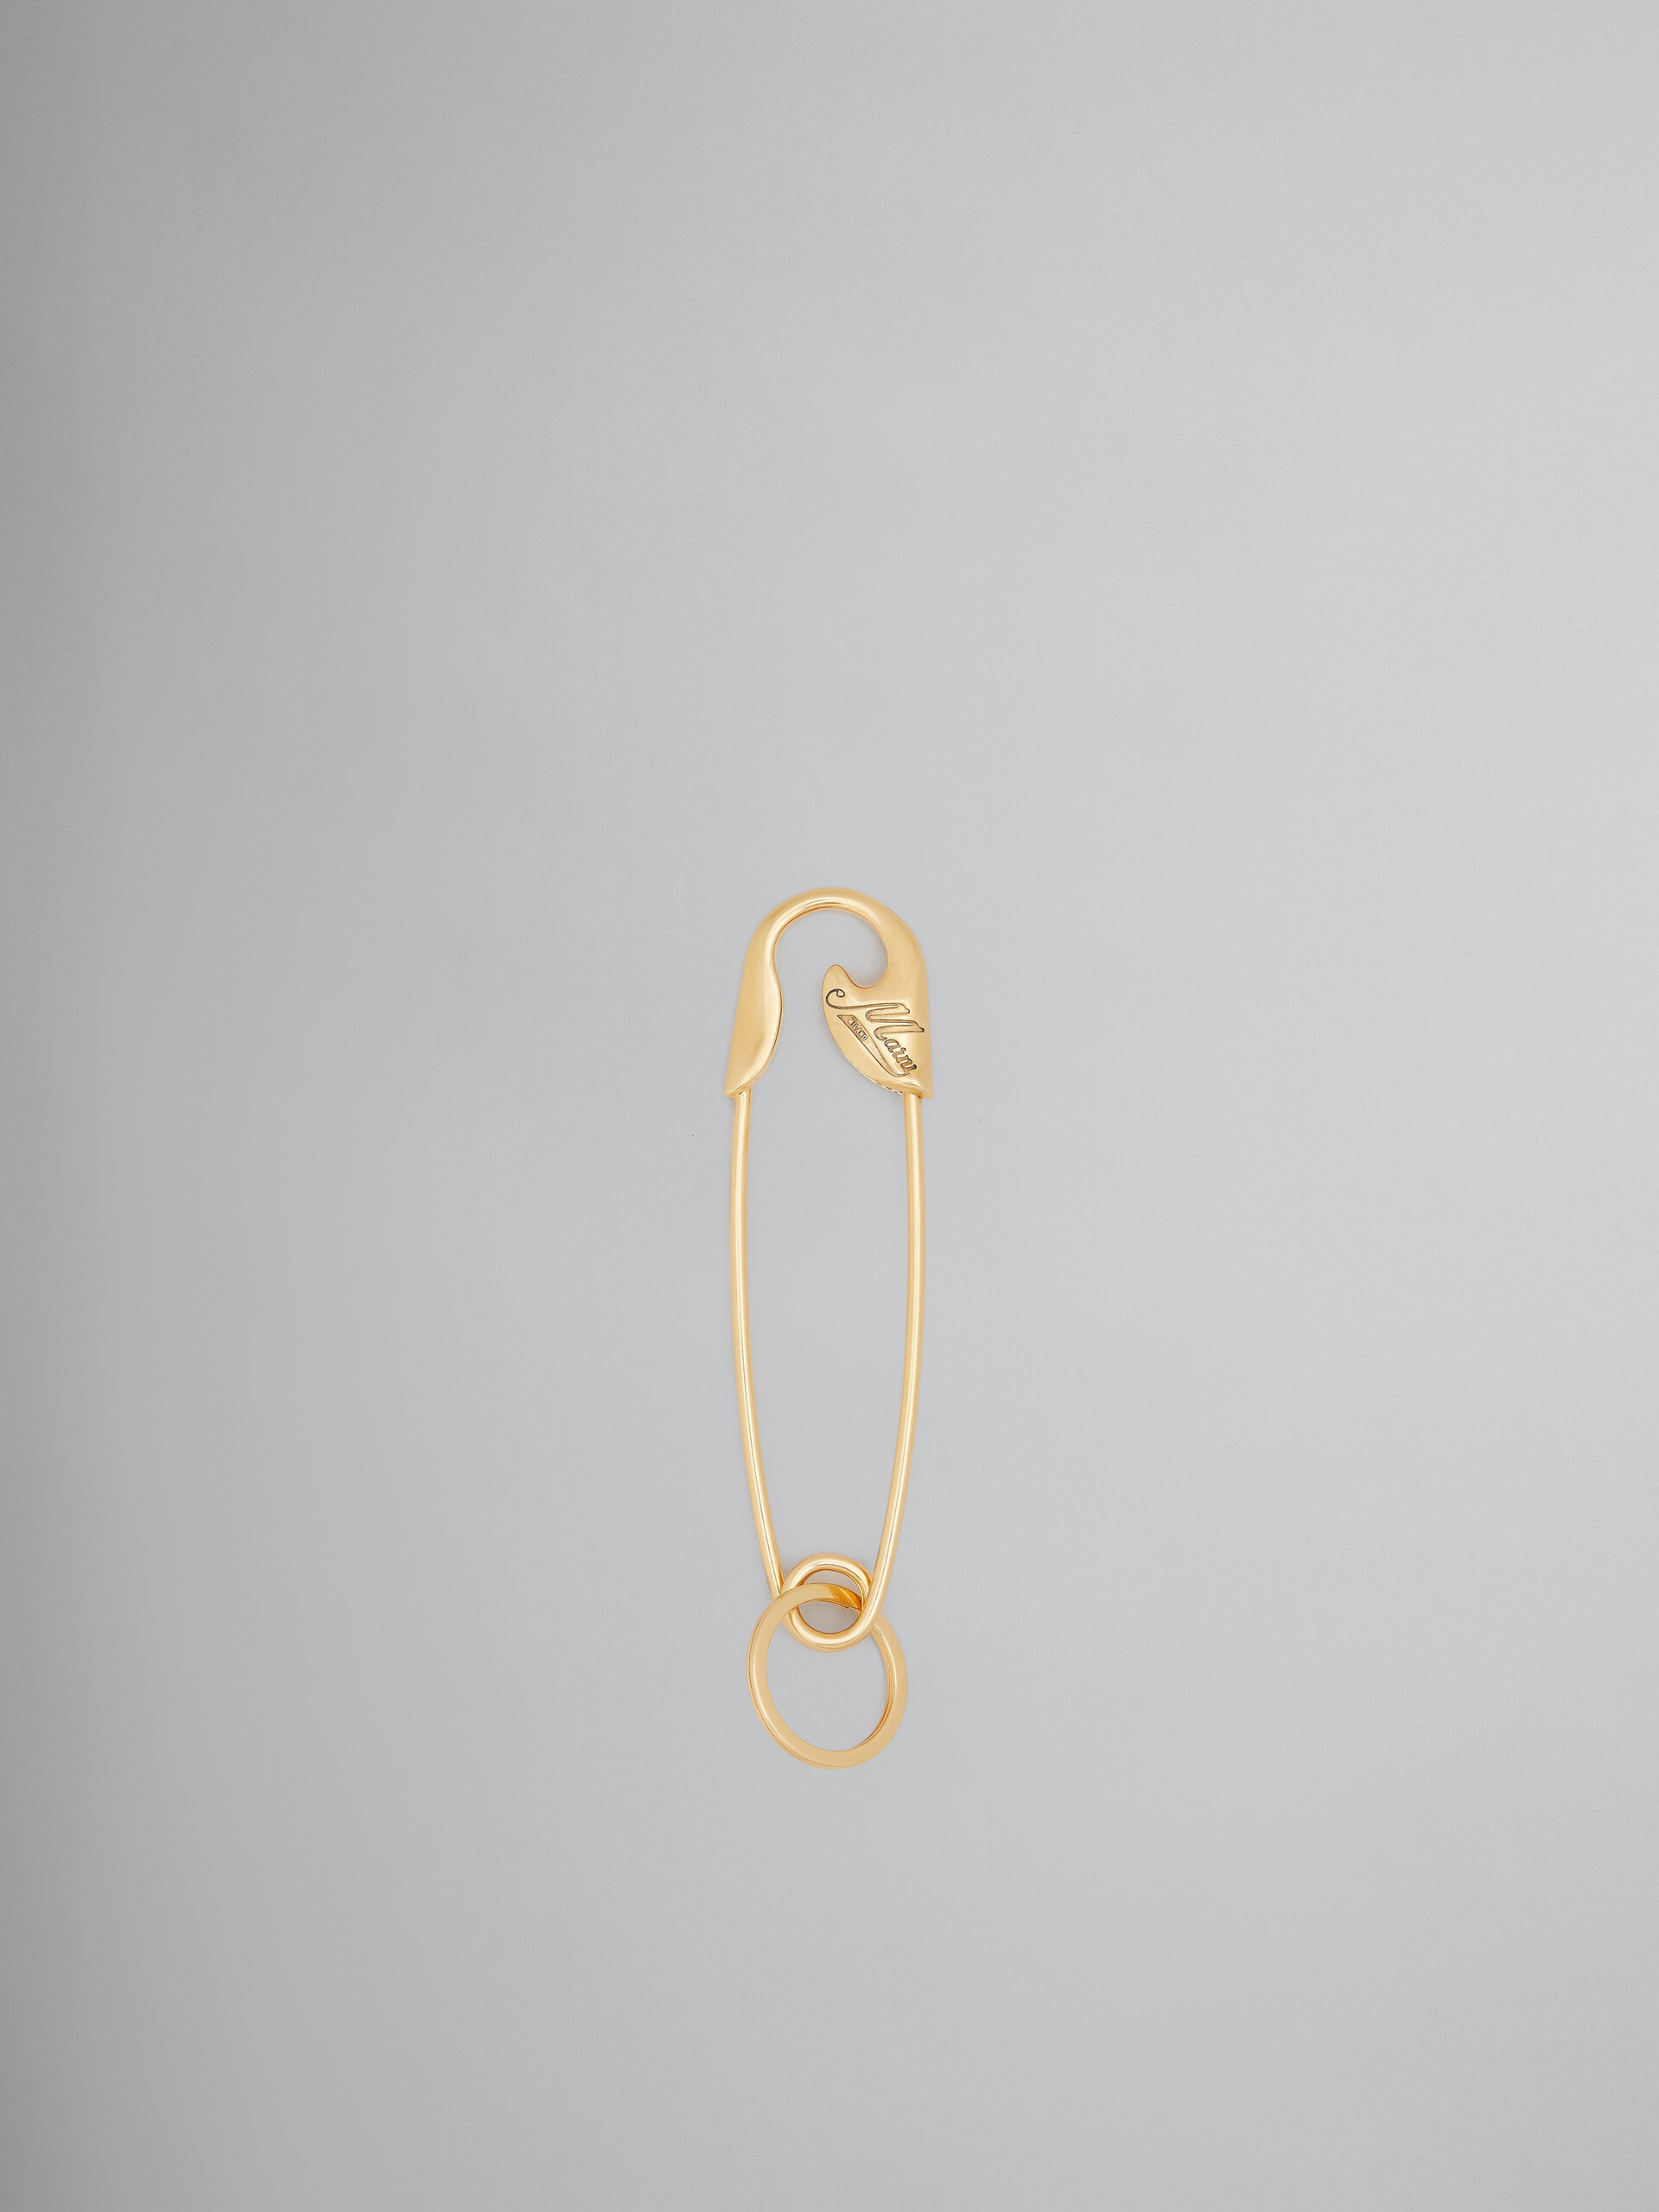 Gold brooch keyring pendant - Jewellery - Image 1